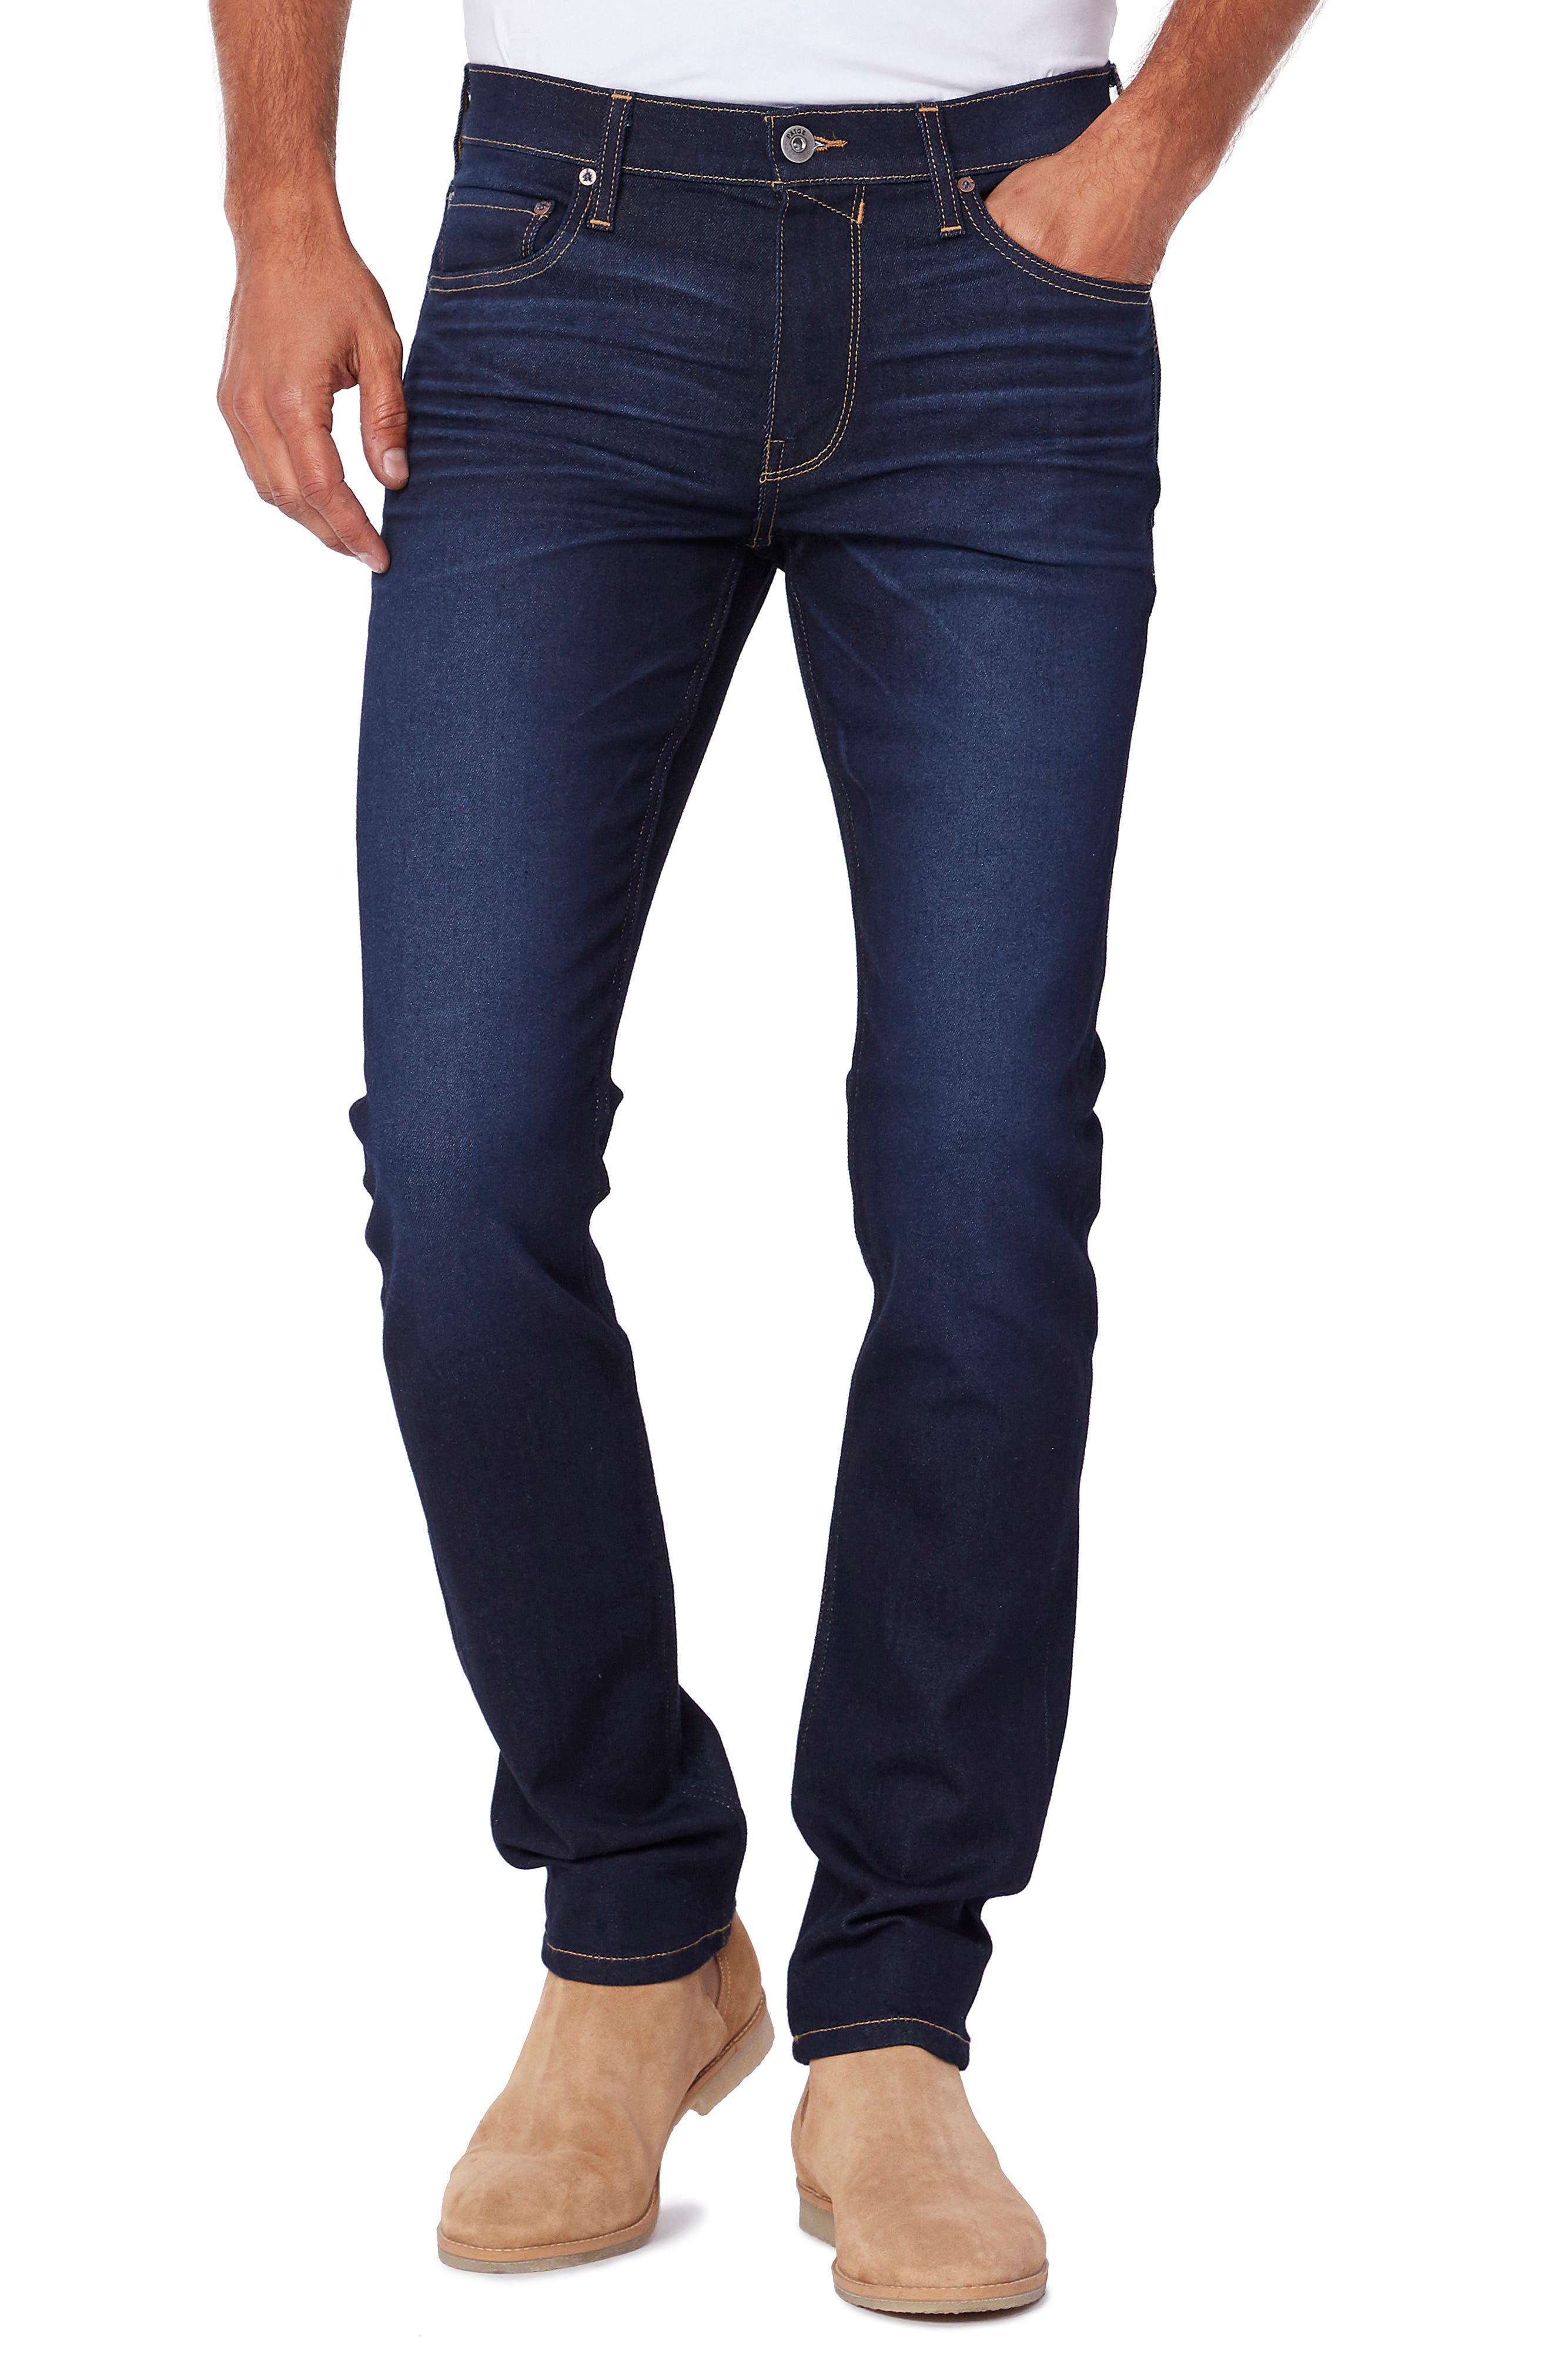 nordstrom paige jeans mens